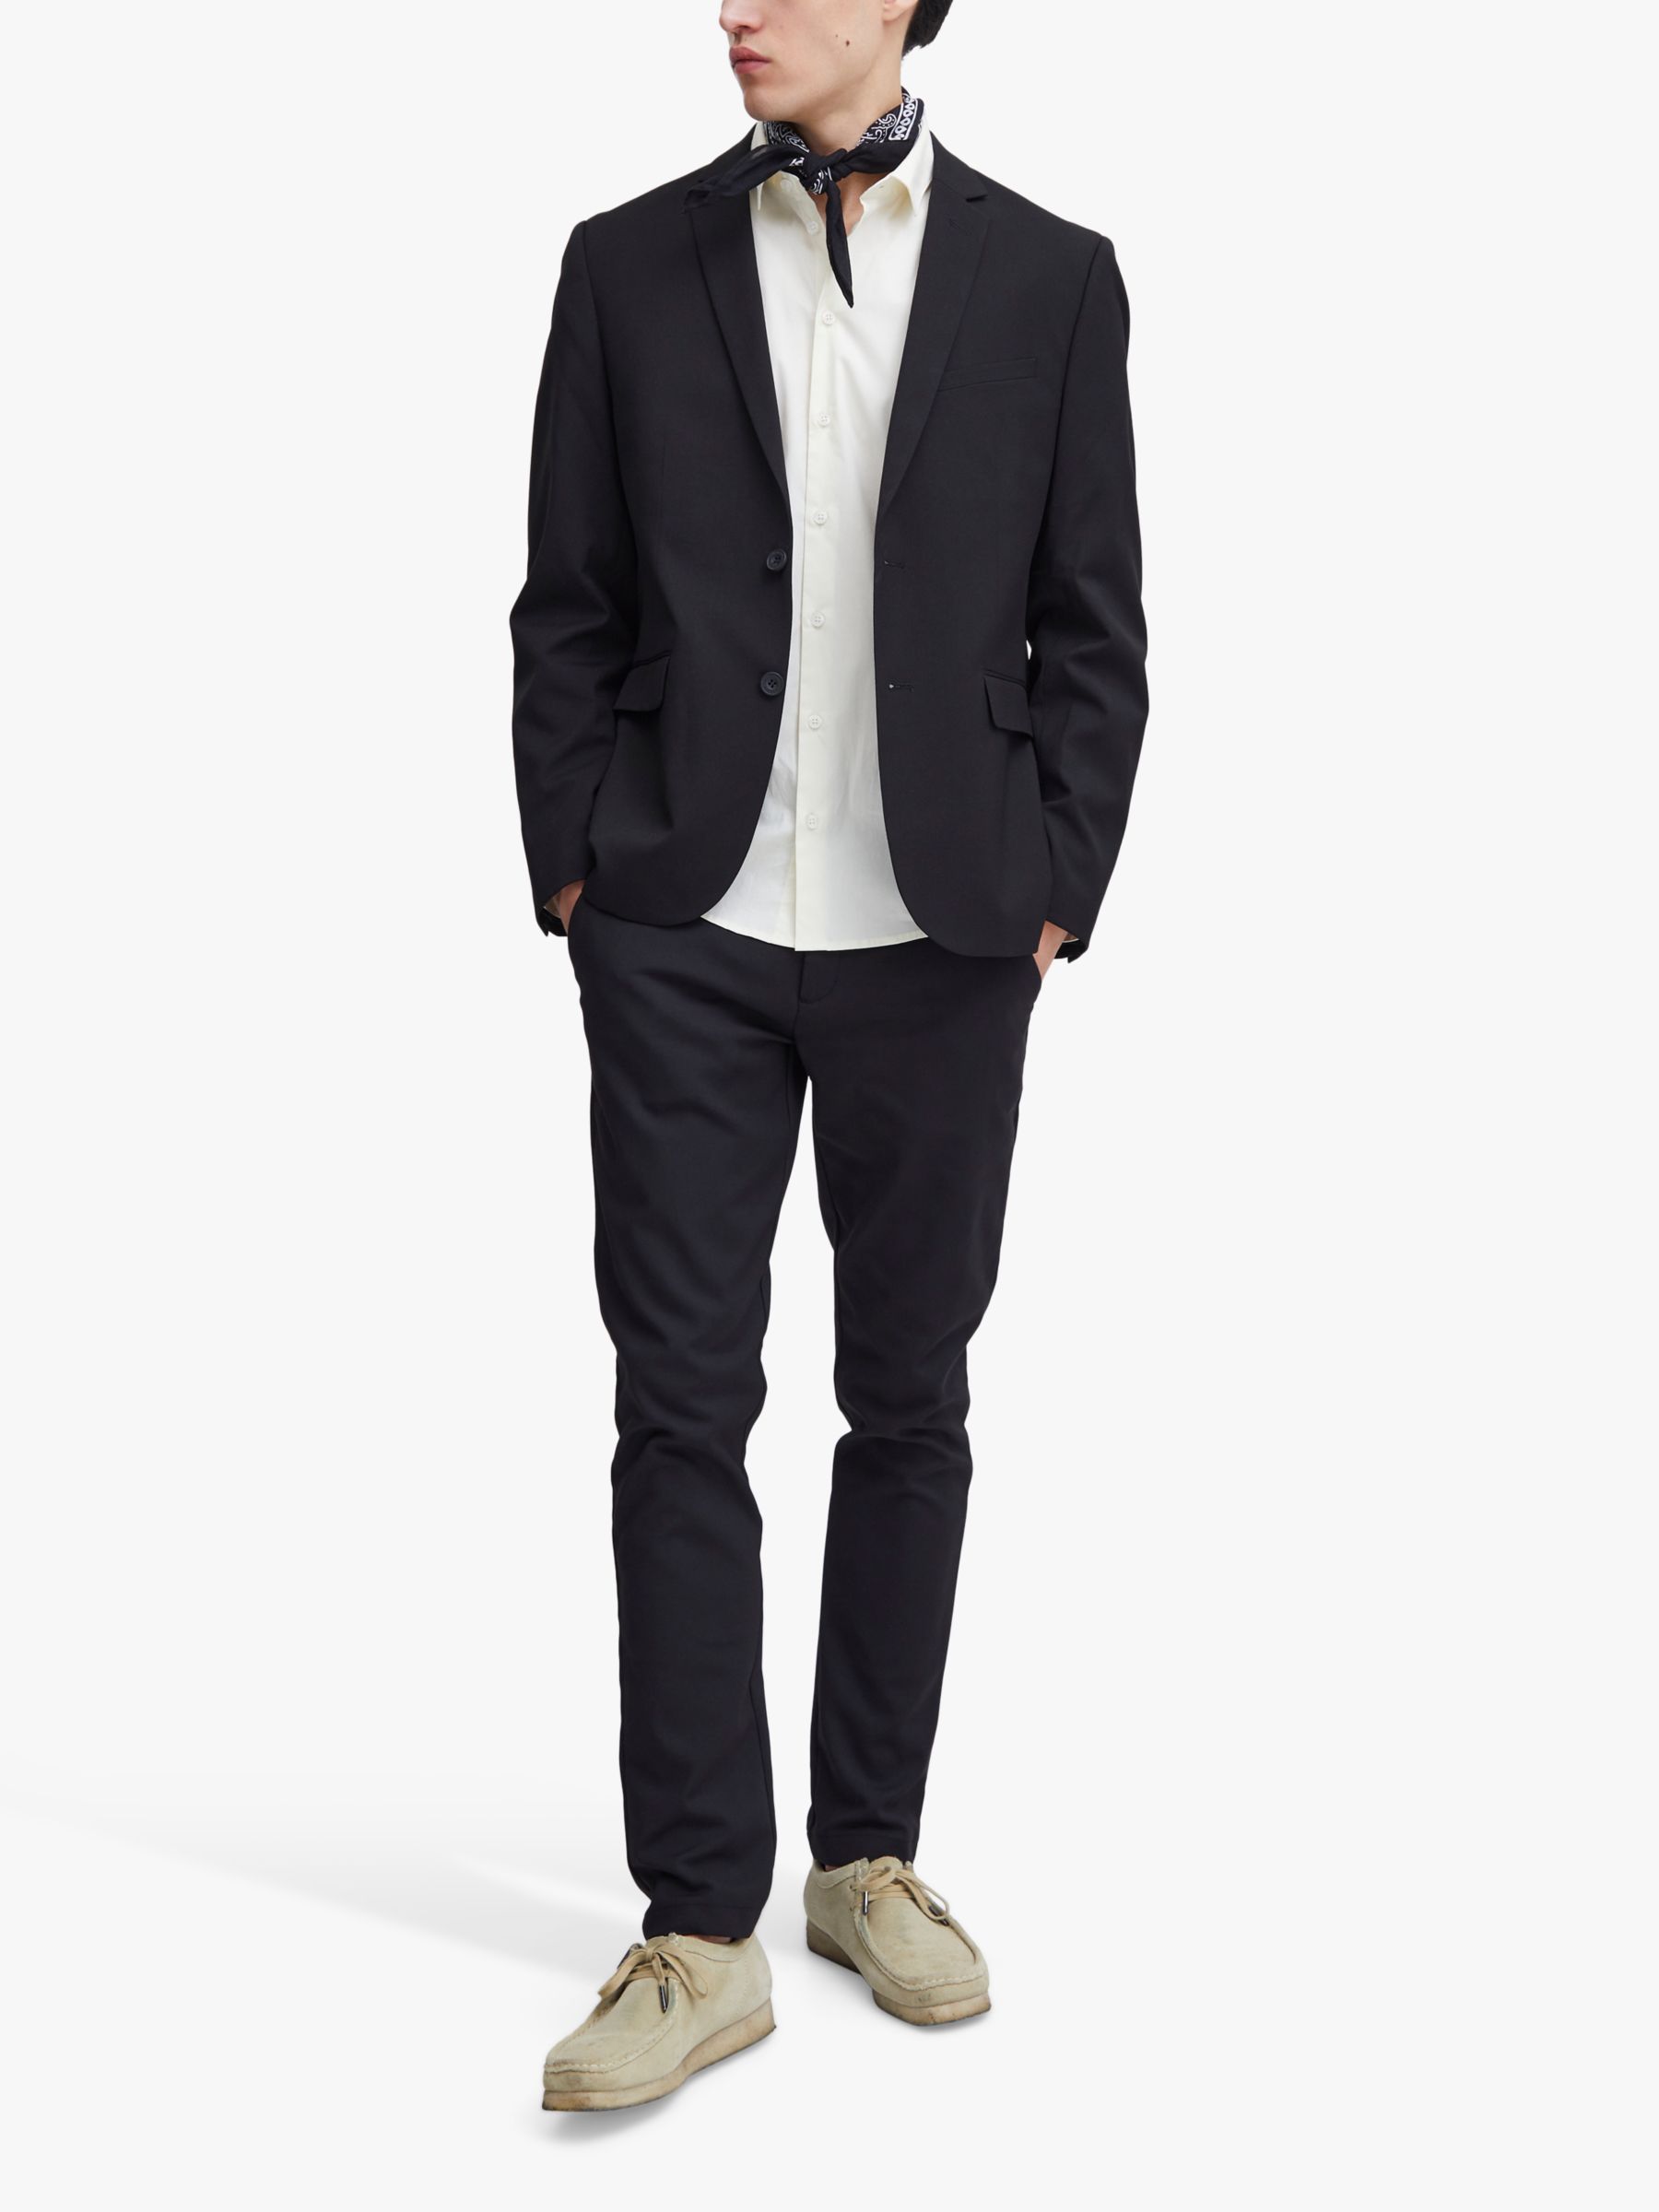 Buy Casual Friday Bernd Slim Fit Suit Jacket Online at johnlewis.com